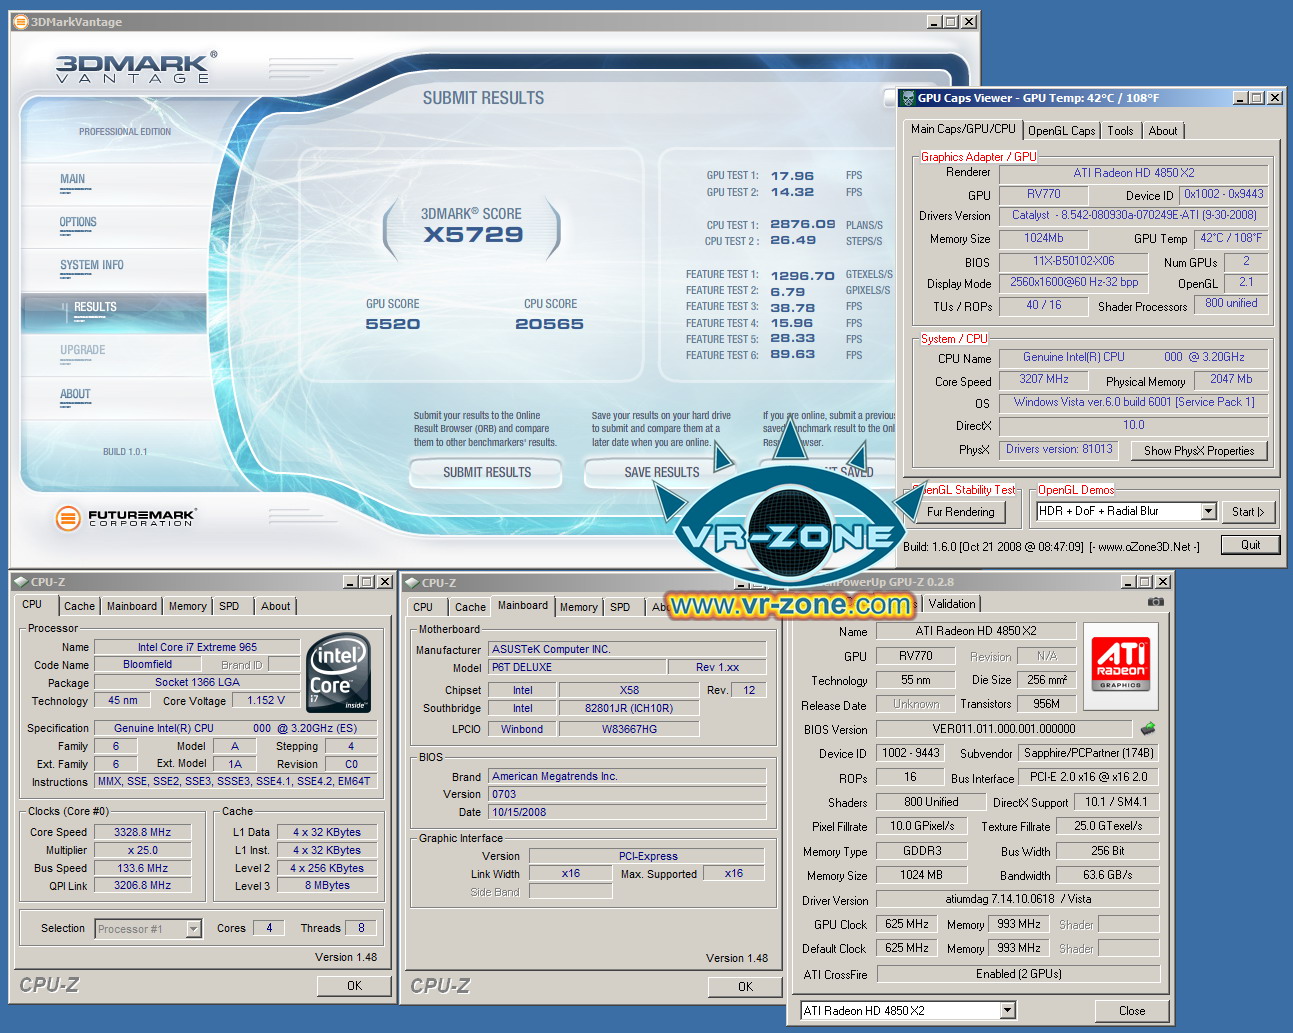 Media asset in full size related to 3dfxzone.it news item entitled as follows: Sapphire ATI Radeon HD 4850 X2 su Core i7: primi benchmark | Image Name: news8895_5.jpg